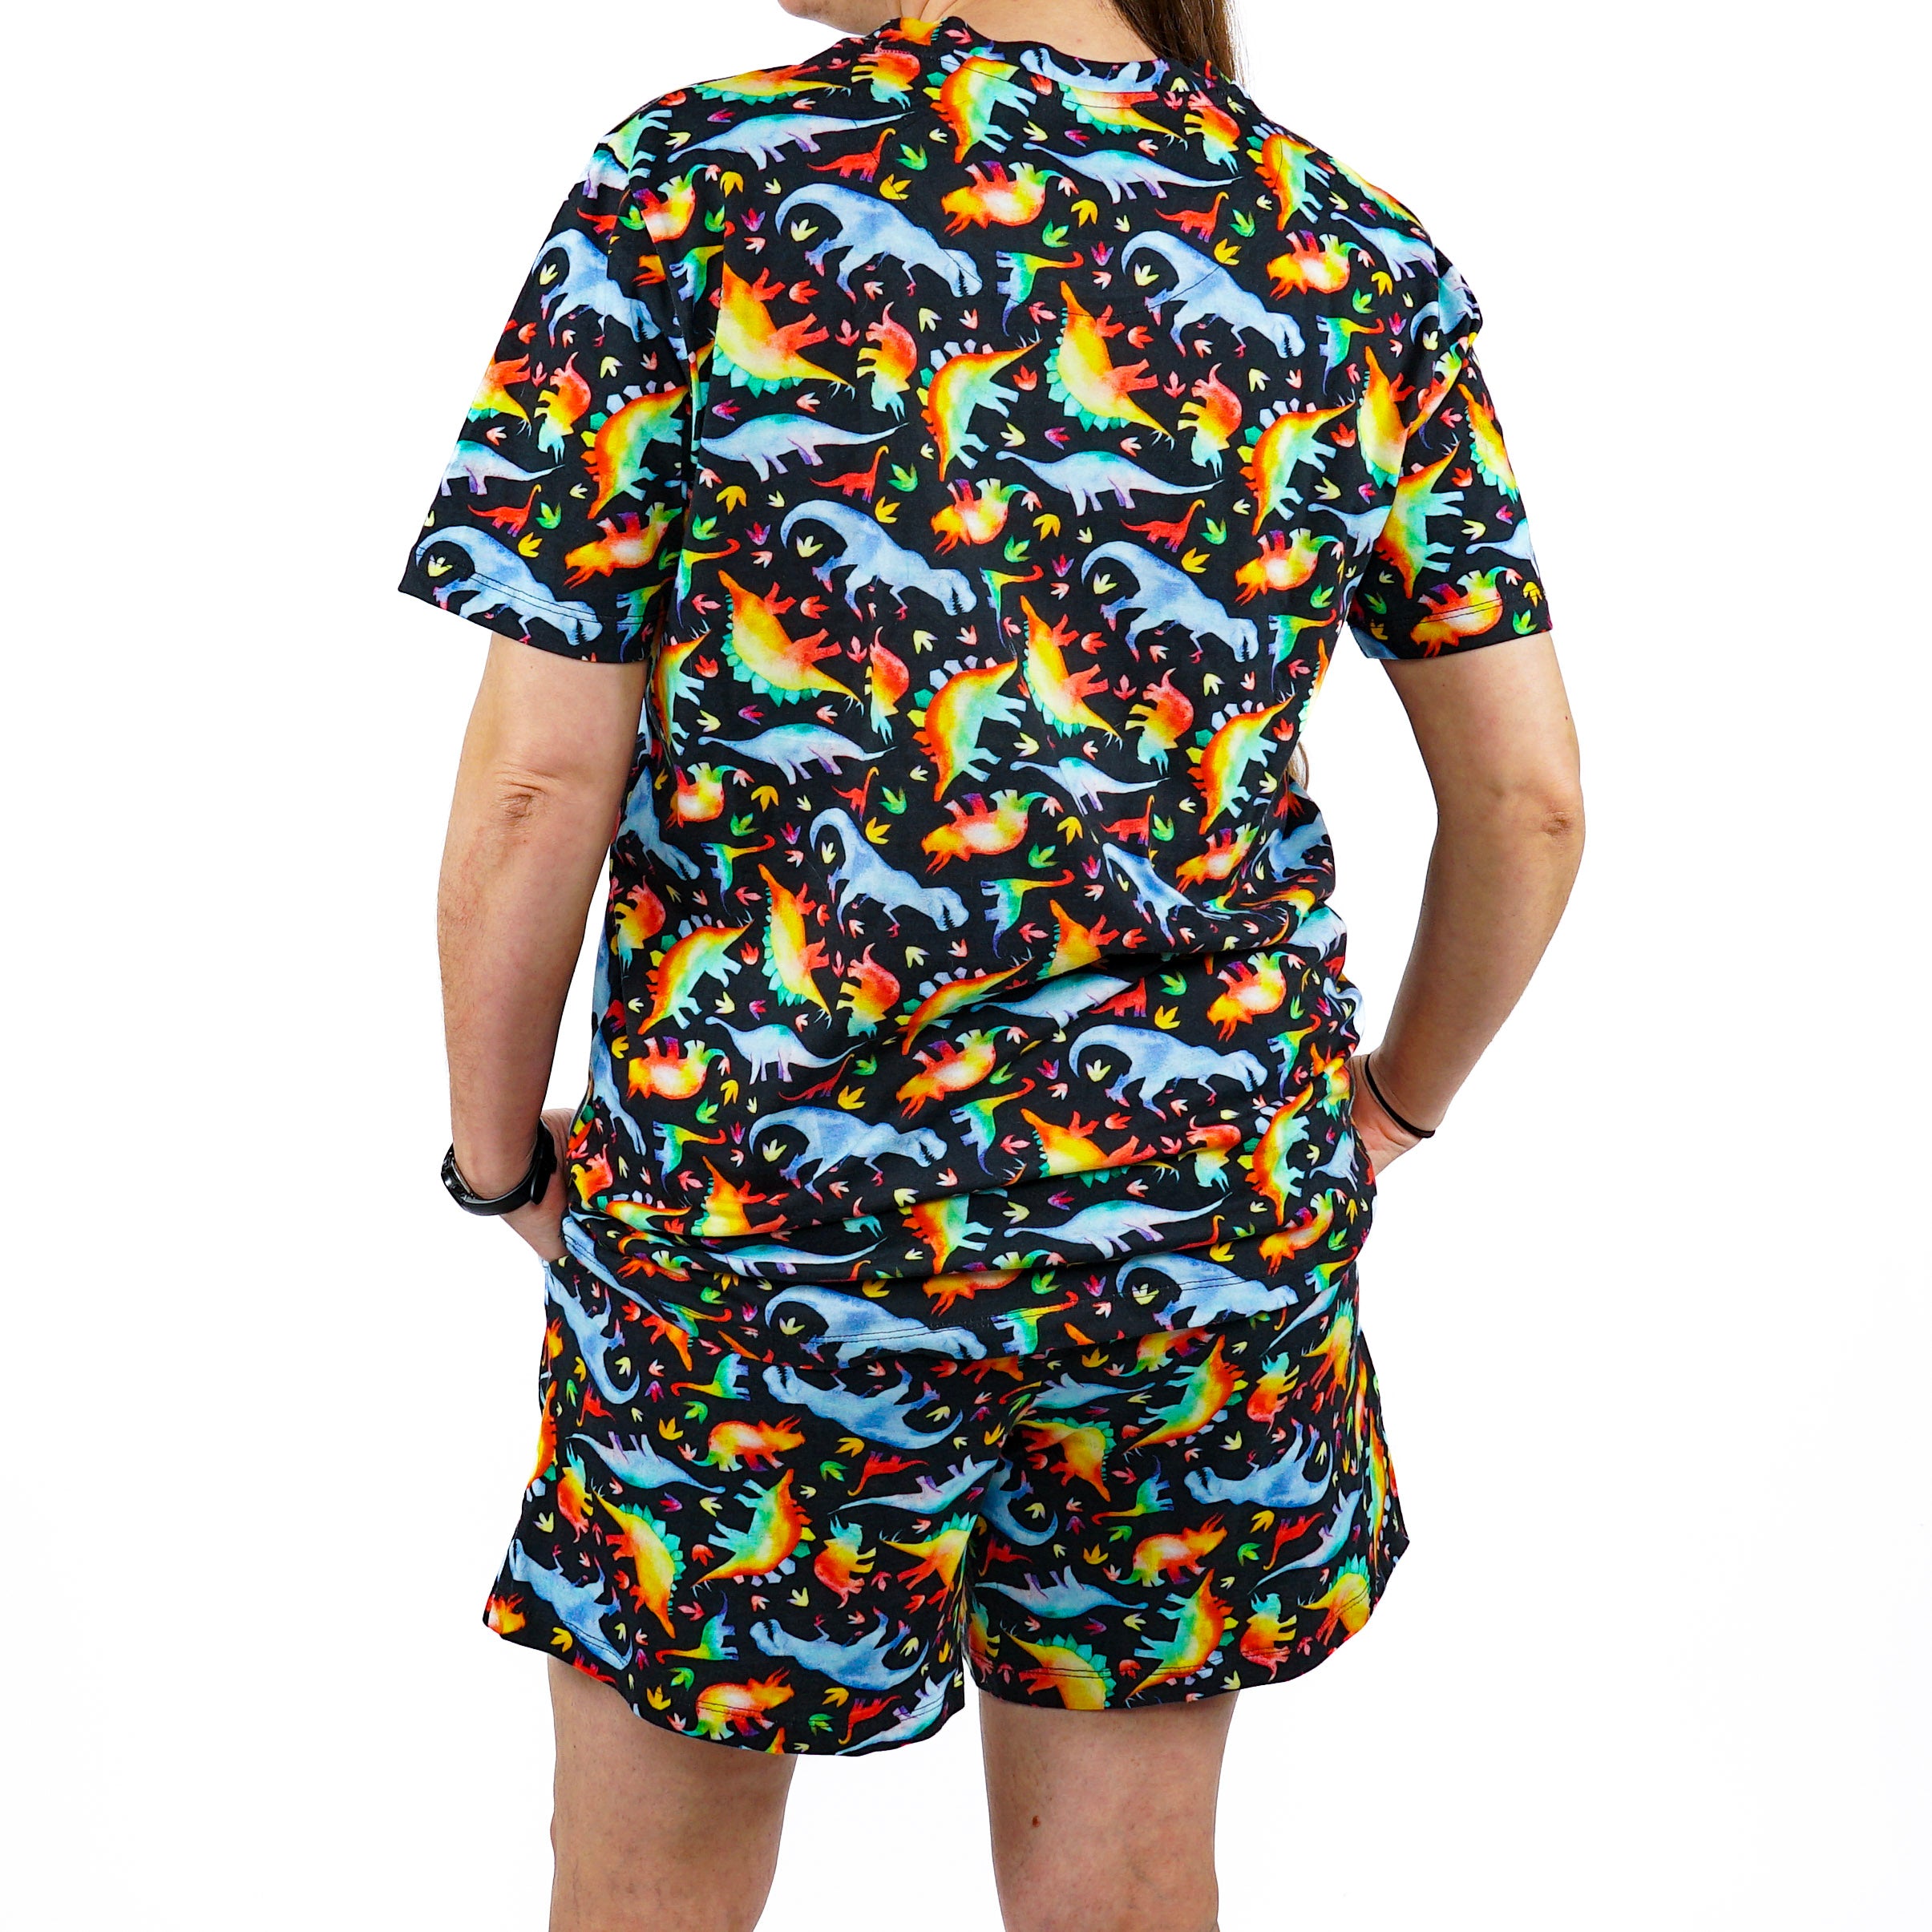 Rainbowsaurus Adults Pajamas Set